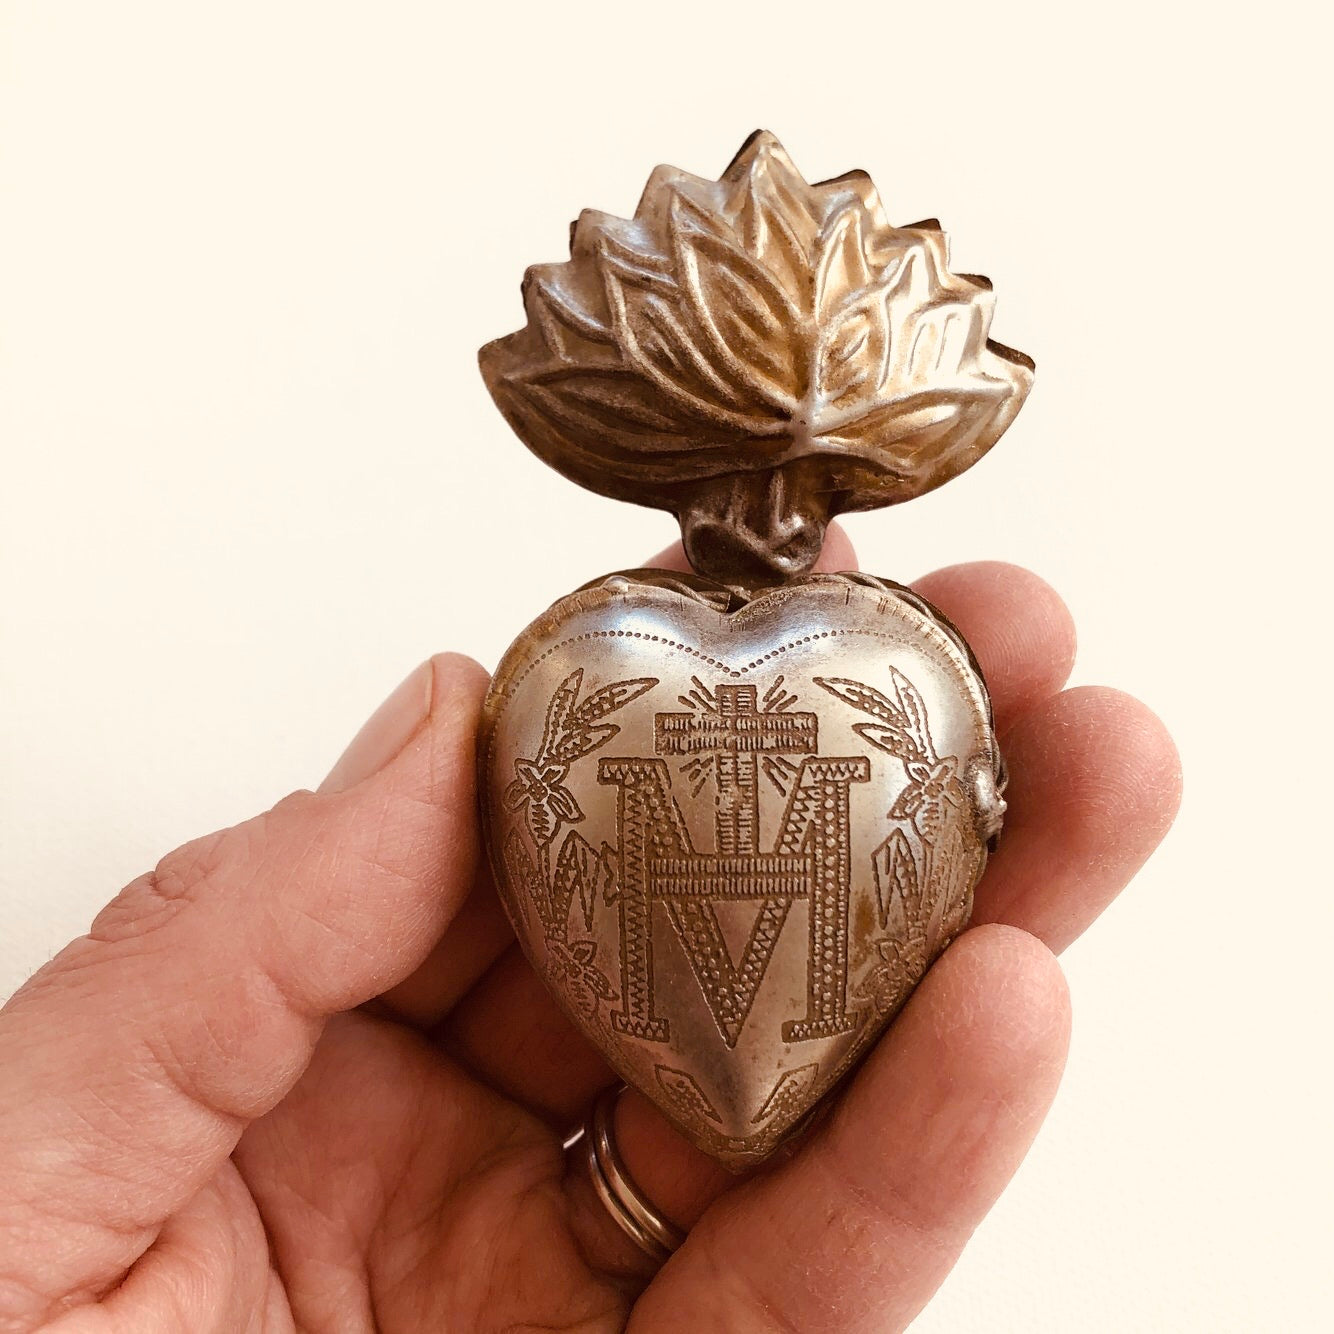 Milagro Ornaments - Most Chaste Heart Of Joseph